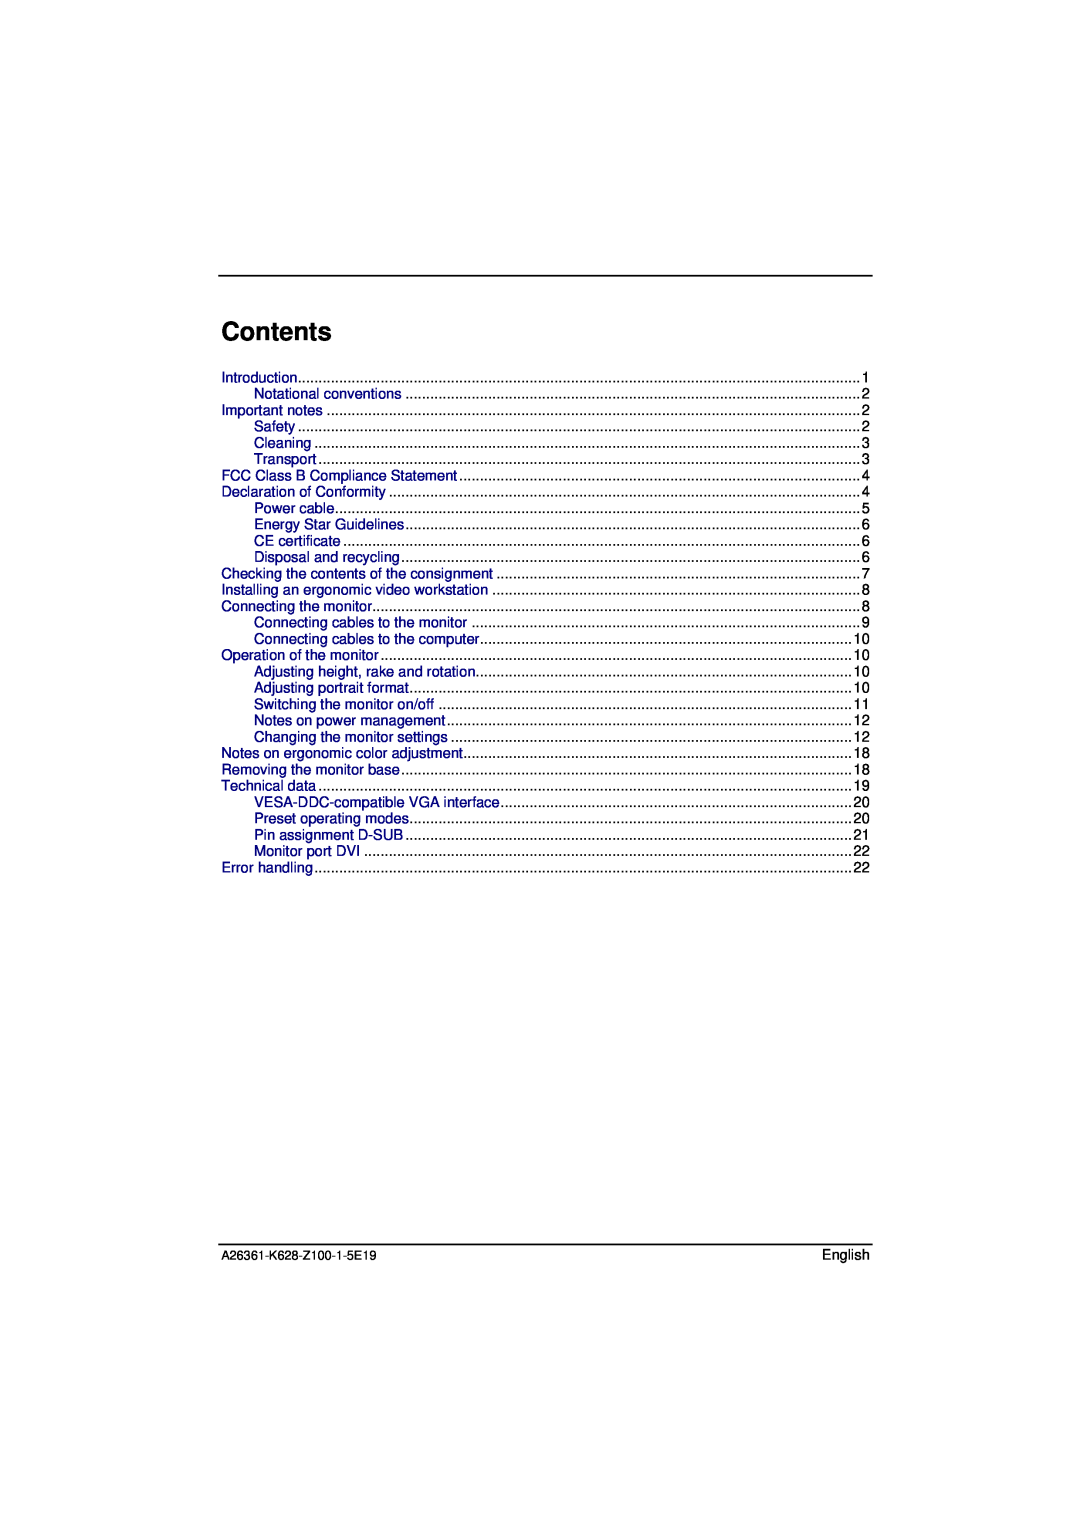 Fujitsu Siemens Computers 4612 FA manual Contents 